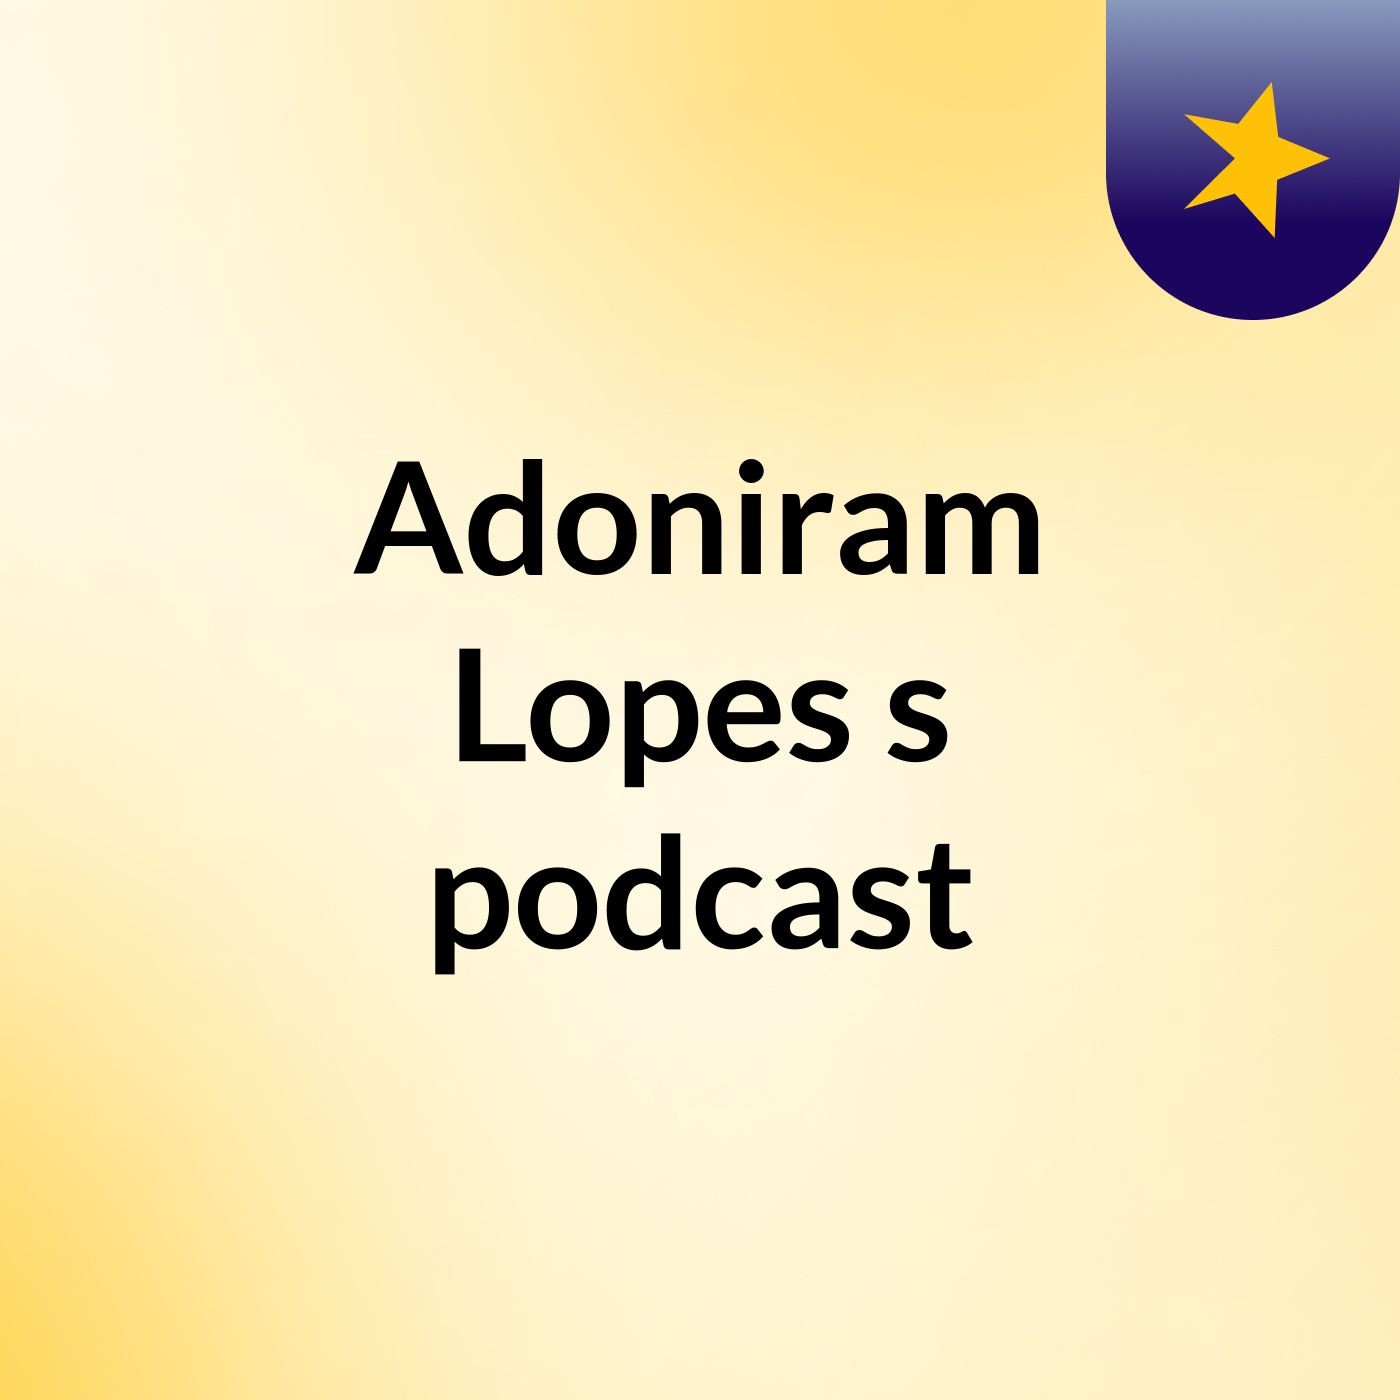 Adoniram Lopes's podcast